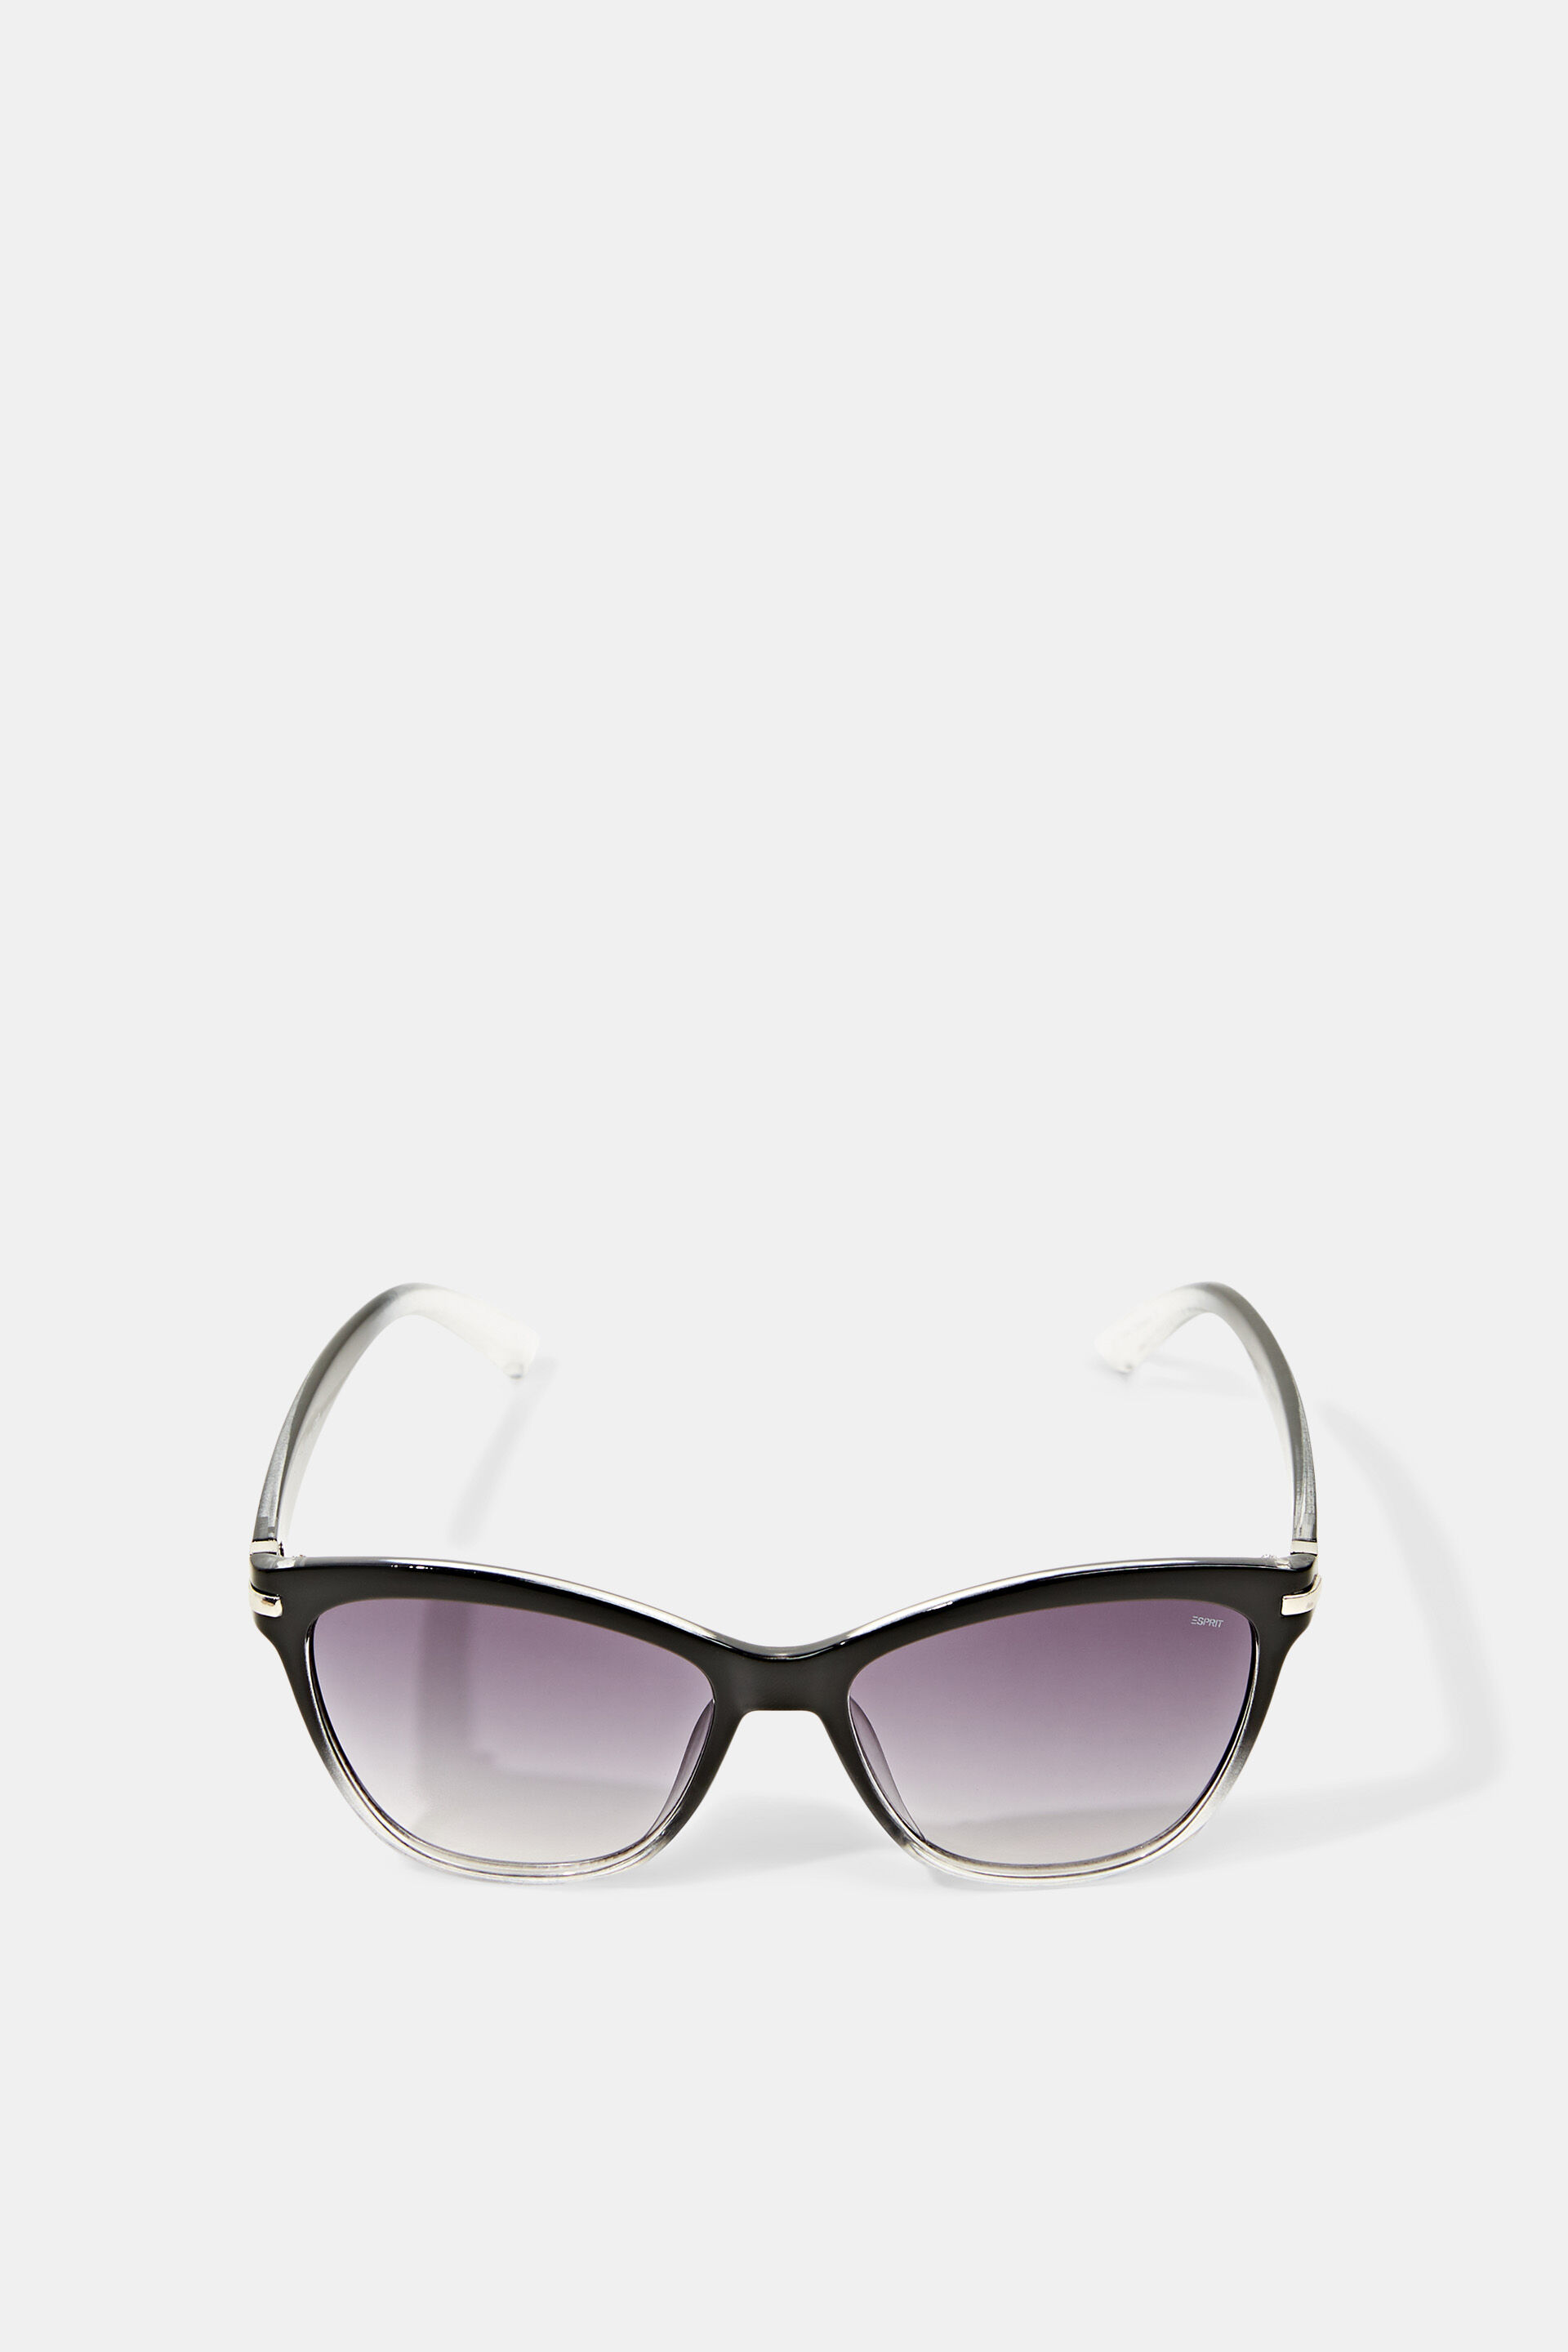 Esprit Sunglasses metal with details